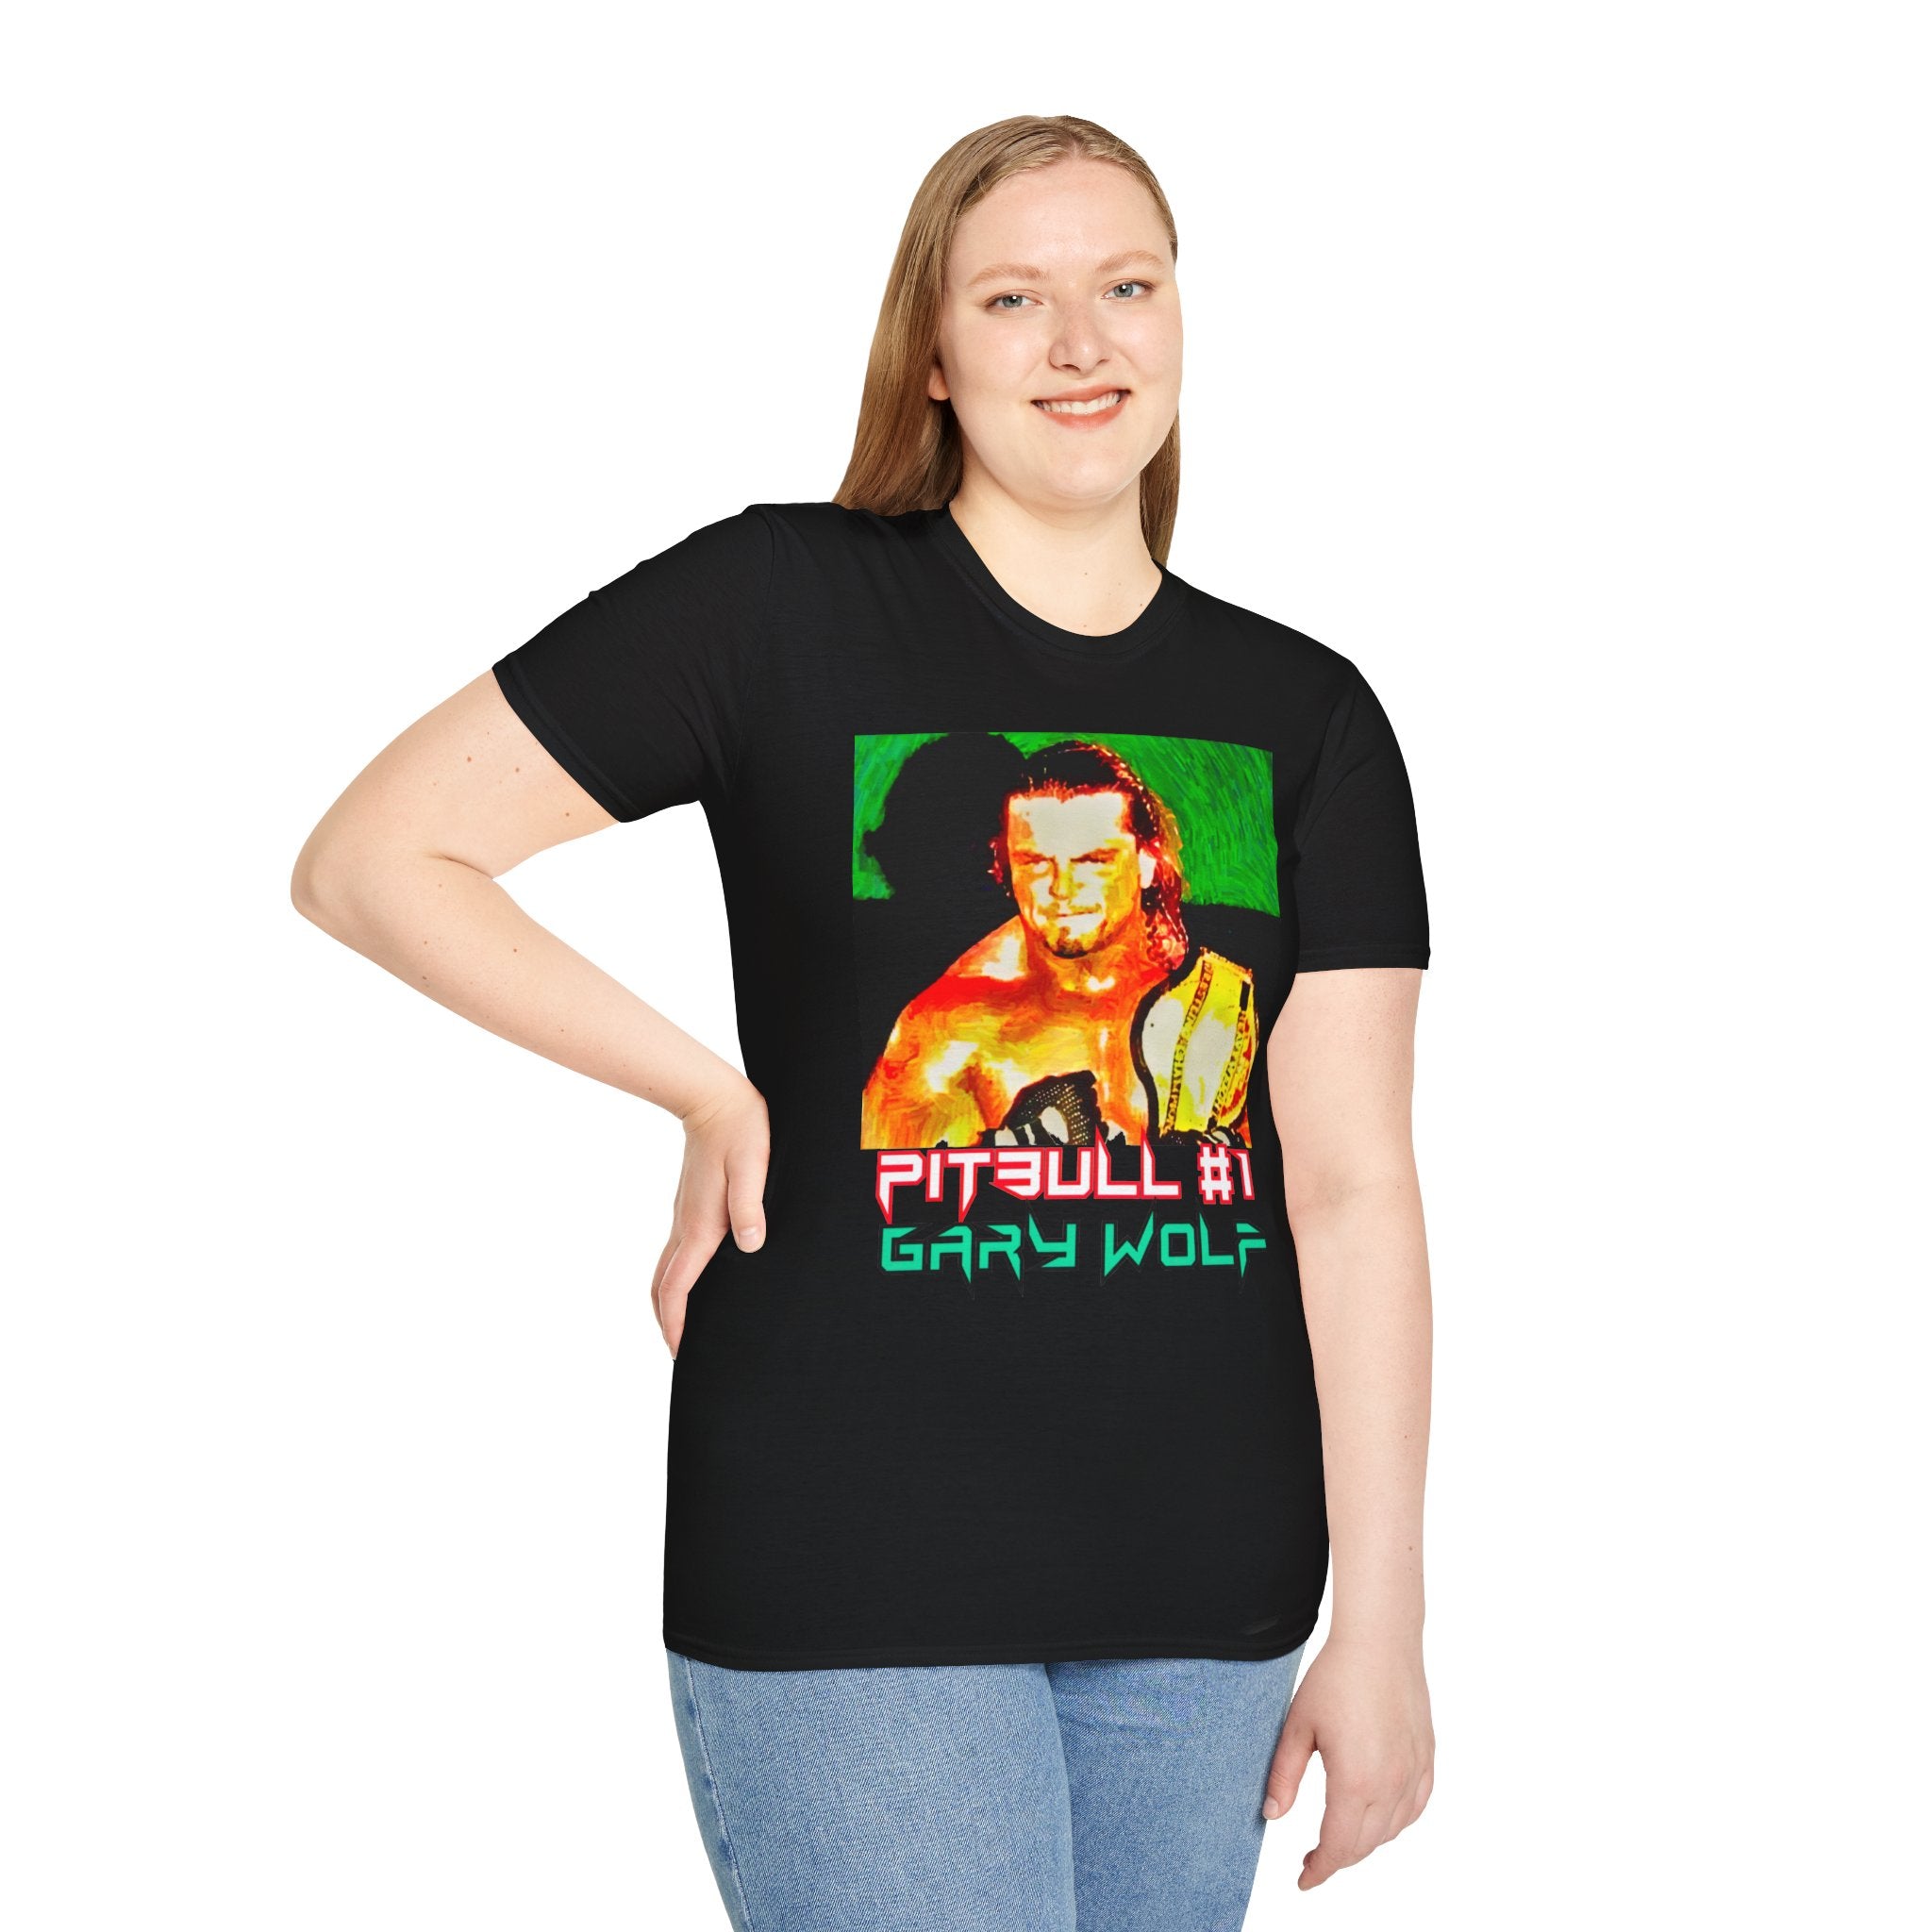 Pitbull Gary Wolf  T-Shirt